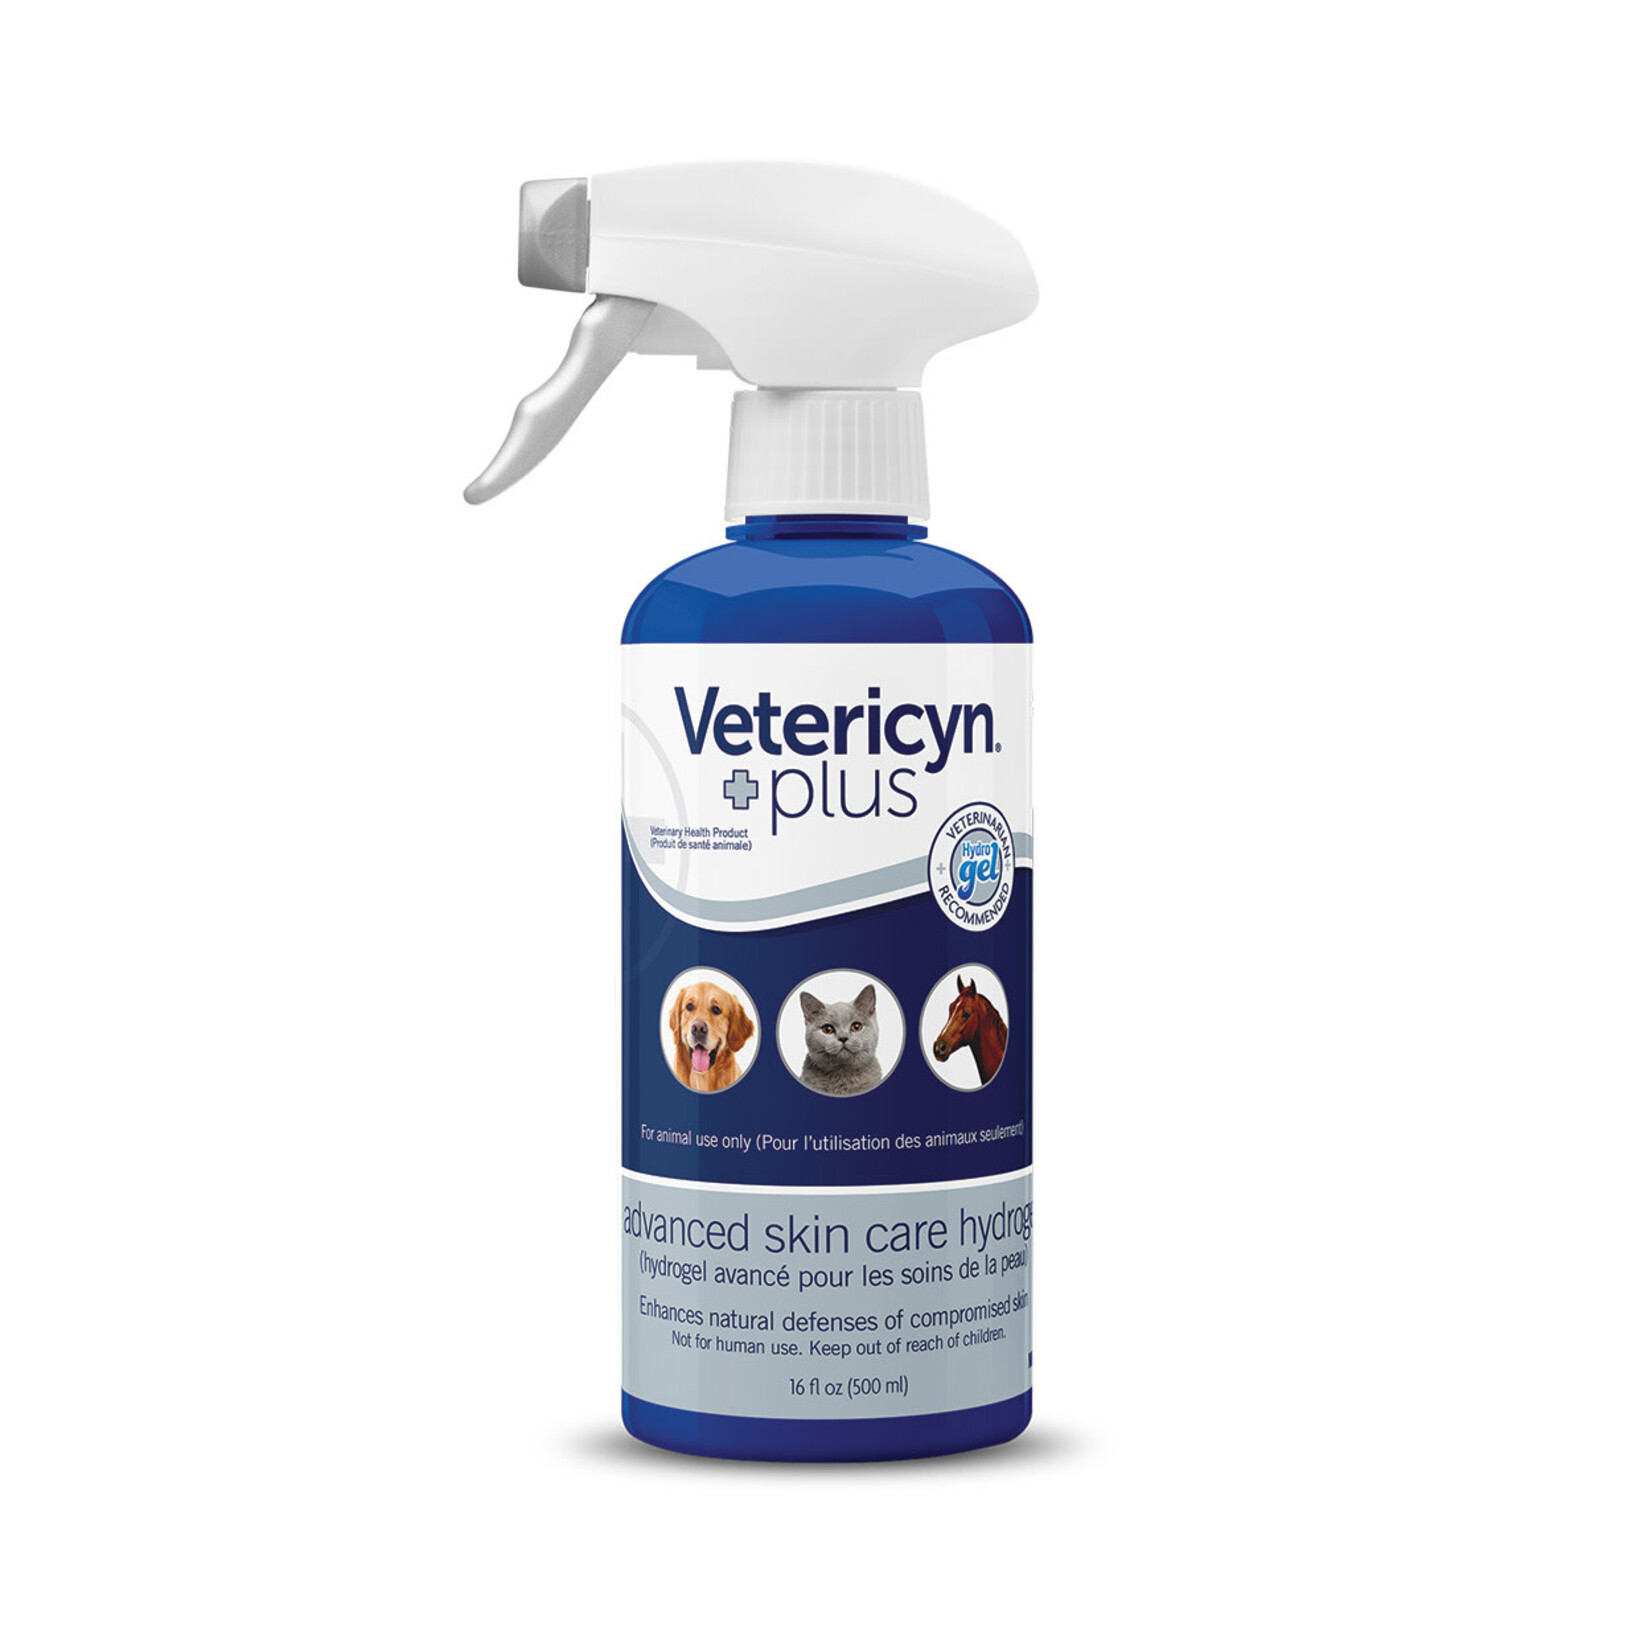 VETERICYN (W) Vetericyn Plus Advanced Skin Care Hydrogel - 16 fl oz